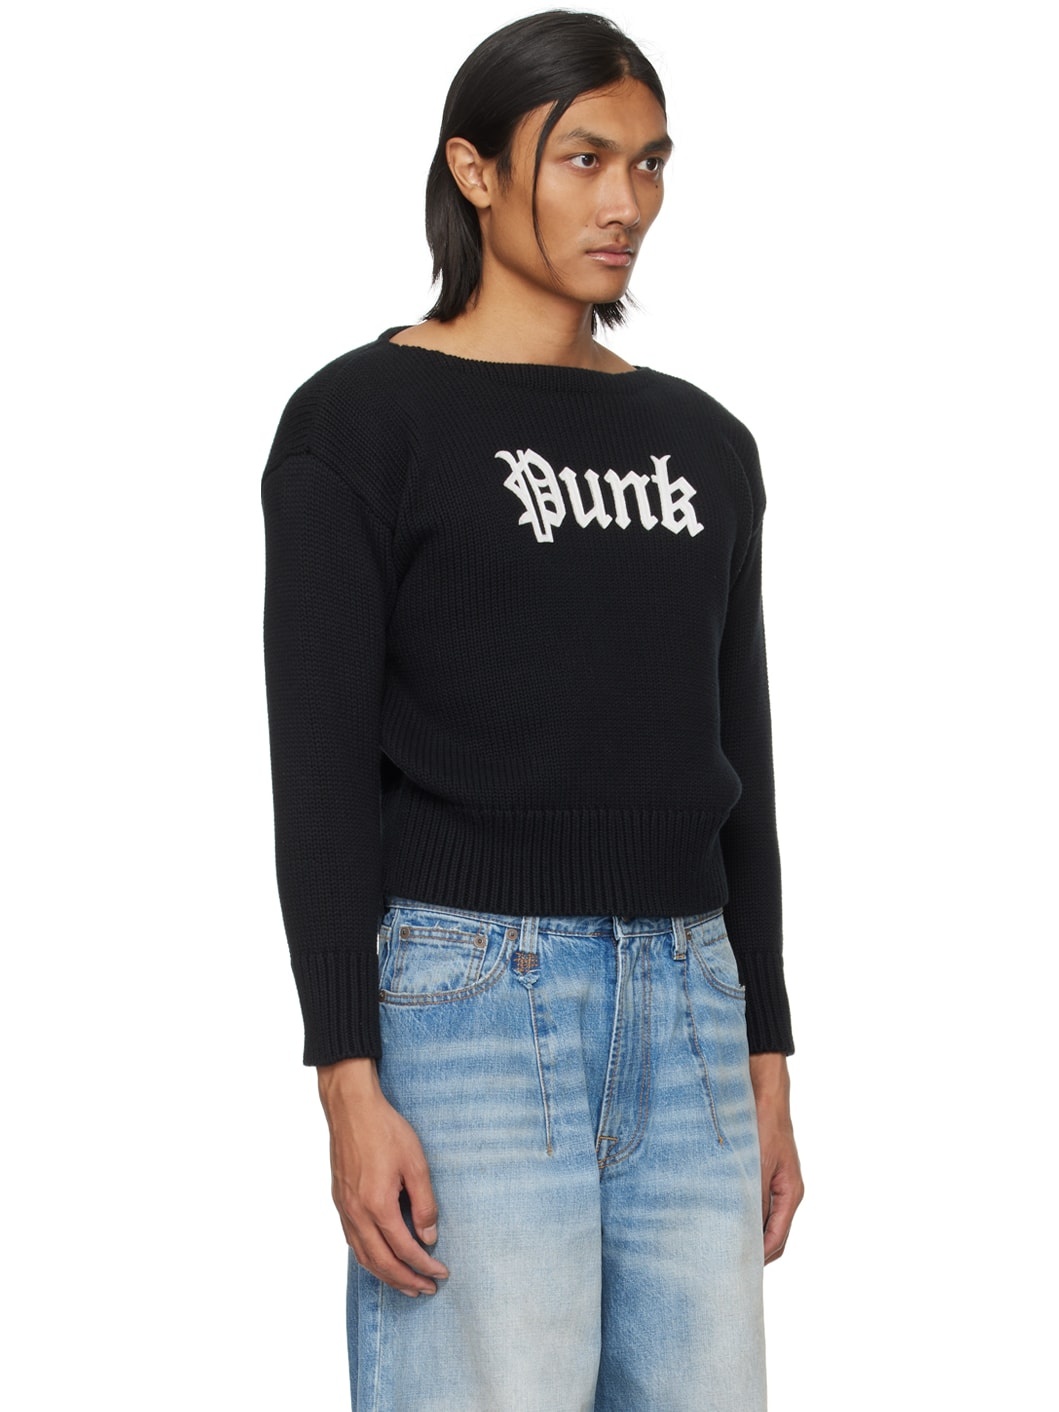 Black Gothic 'Punk' Sweater - 2